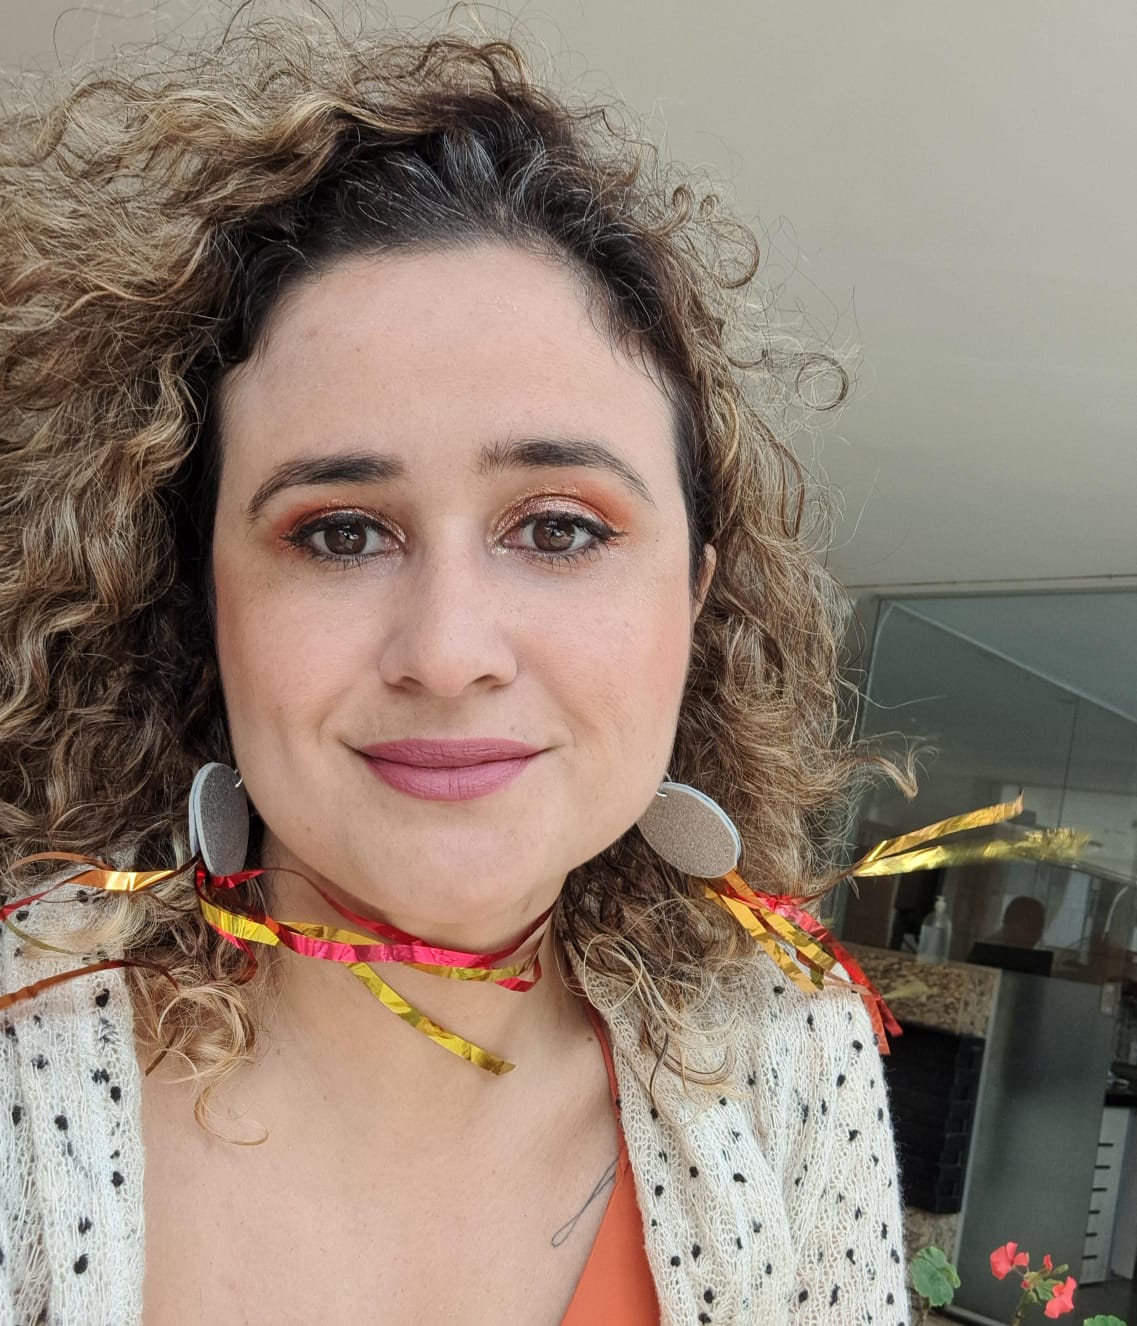 Entrevista com Thereza Raquel Borges, psicóloga, e Coordenadora Executiva do Instituto Cultural e Social No Setor de Brasília